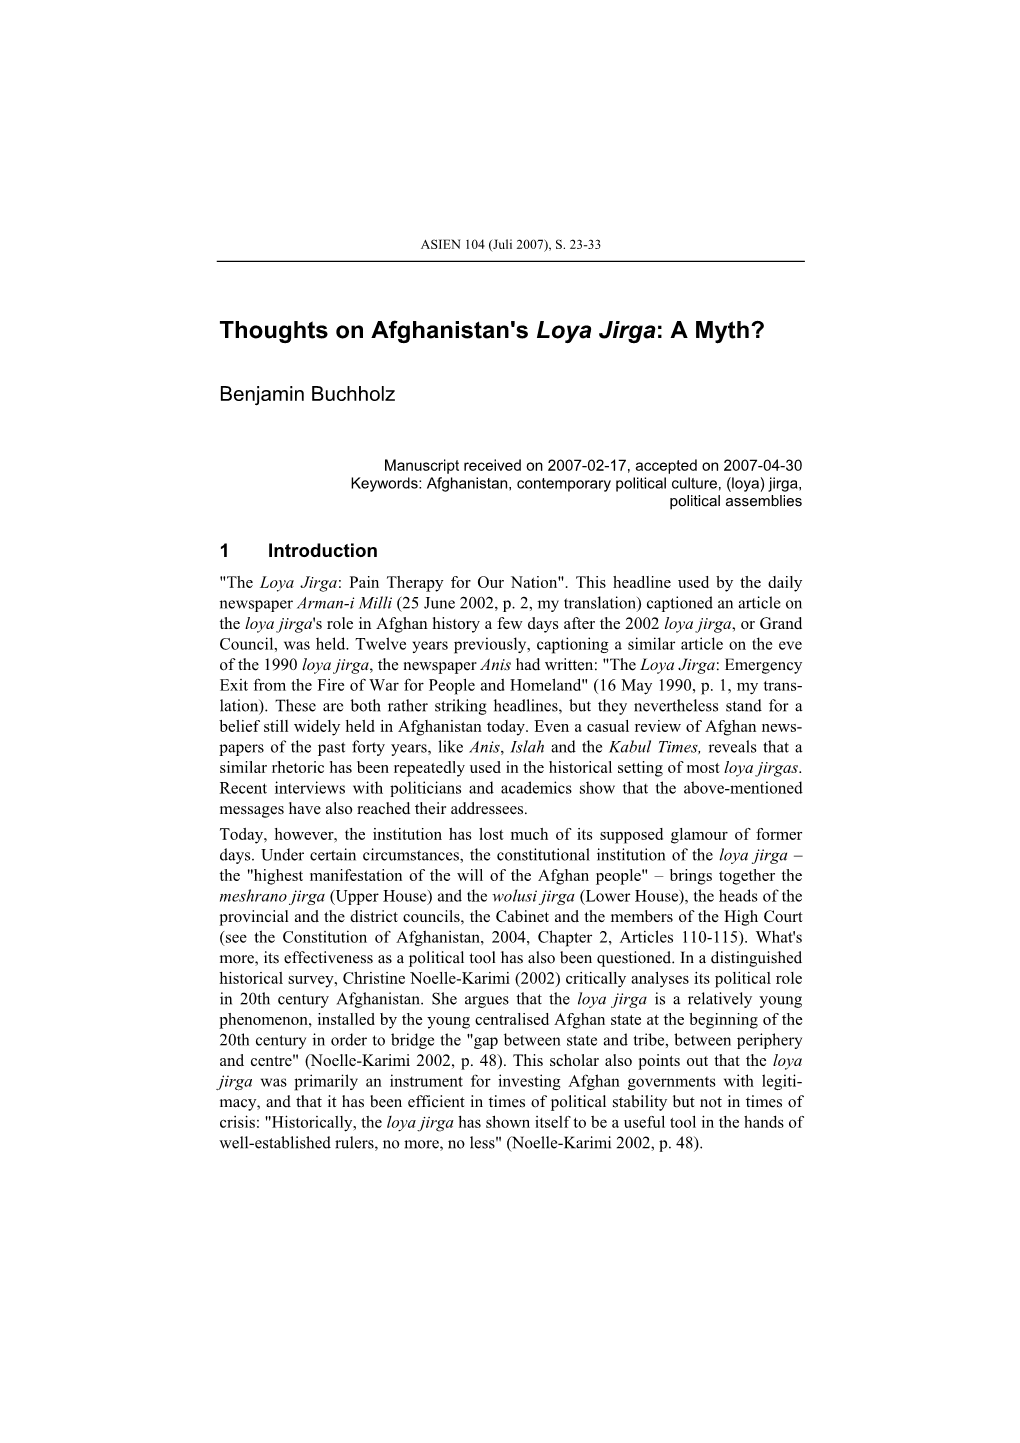 Thoughts on Afghanistan's Loya Jirga: a Myth?